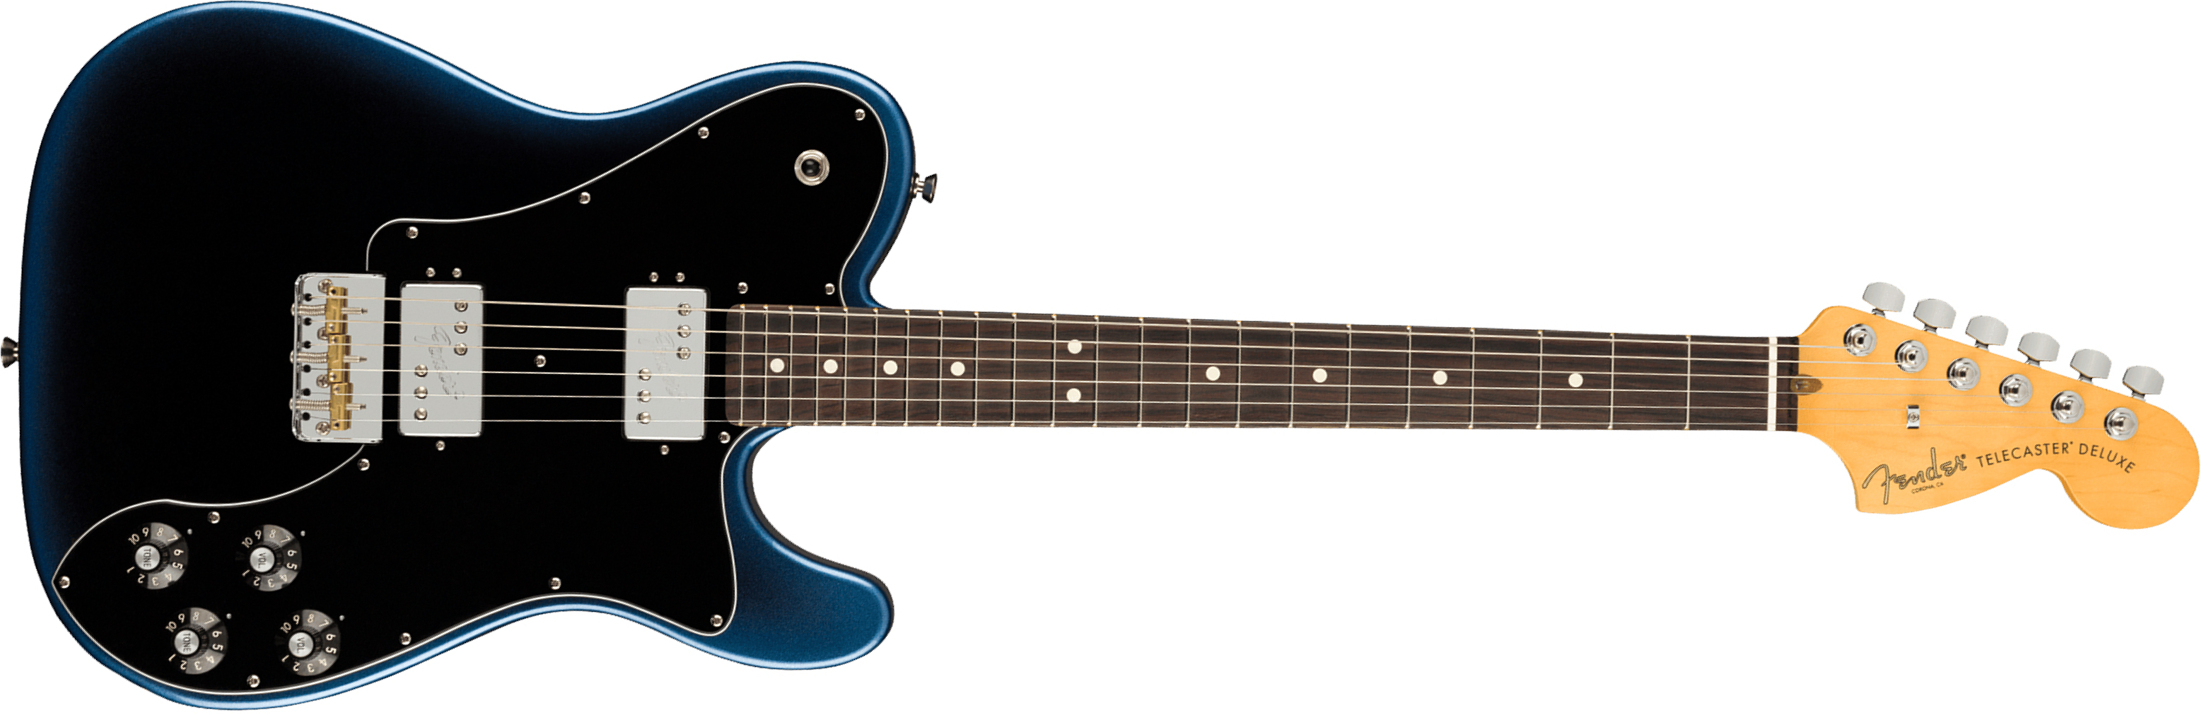 Fender Tele Deluxe American Professional Ii Usa Rw - Dark Night - Tel shape electric guitar - Main picture